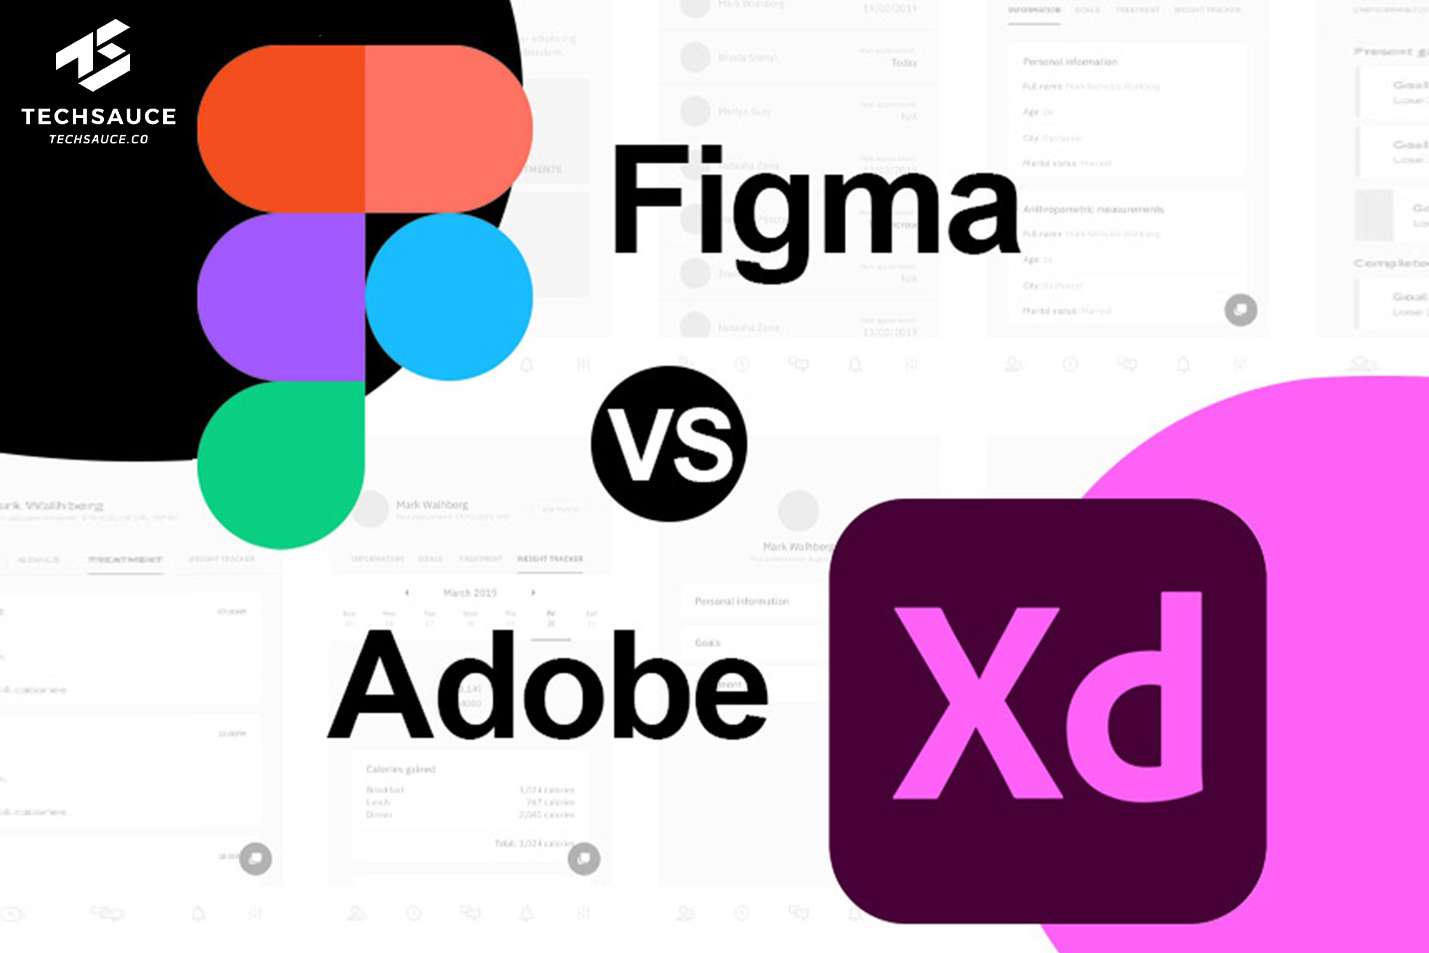 Adobe เข้าซื้อ Figma กินรวบคู่แข่งแพลตฟอร์มดีไซน์ ด้วยดีล 2  หมื่นล้านดอลลาร์ แต่นักลงทุนต่างวิตกจนหุ้นดิ่ง 17% | Techsauce